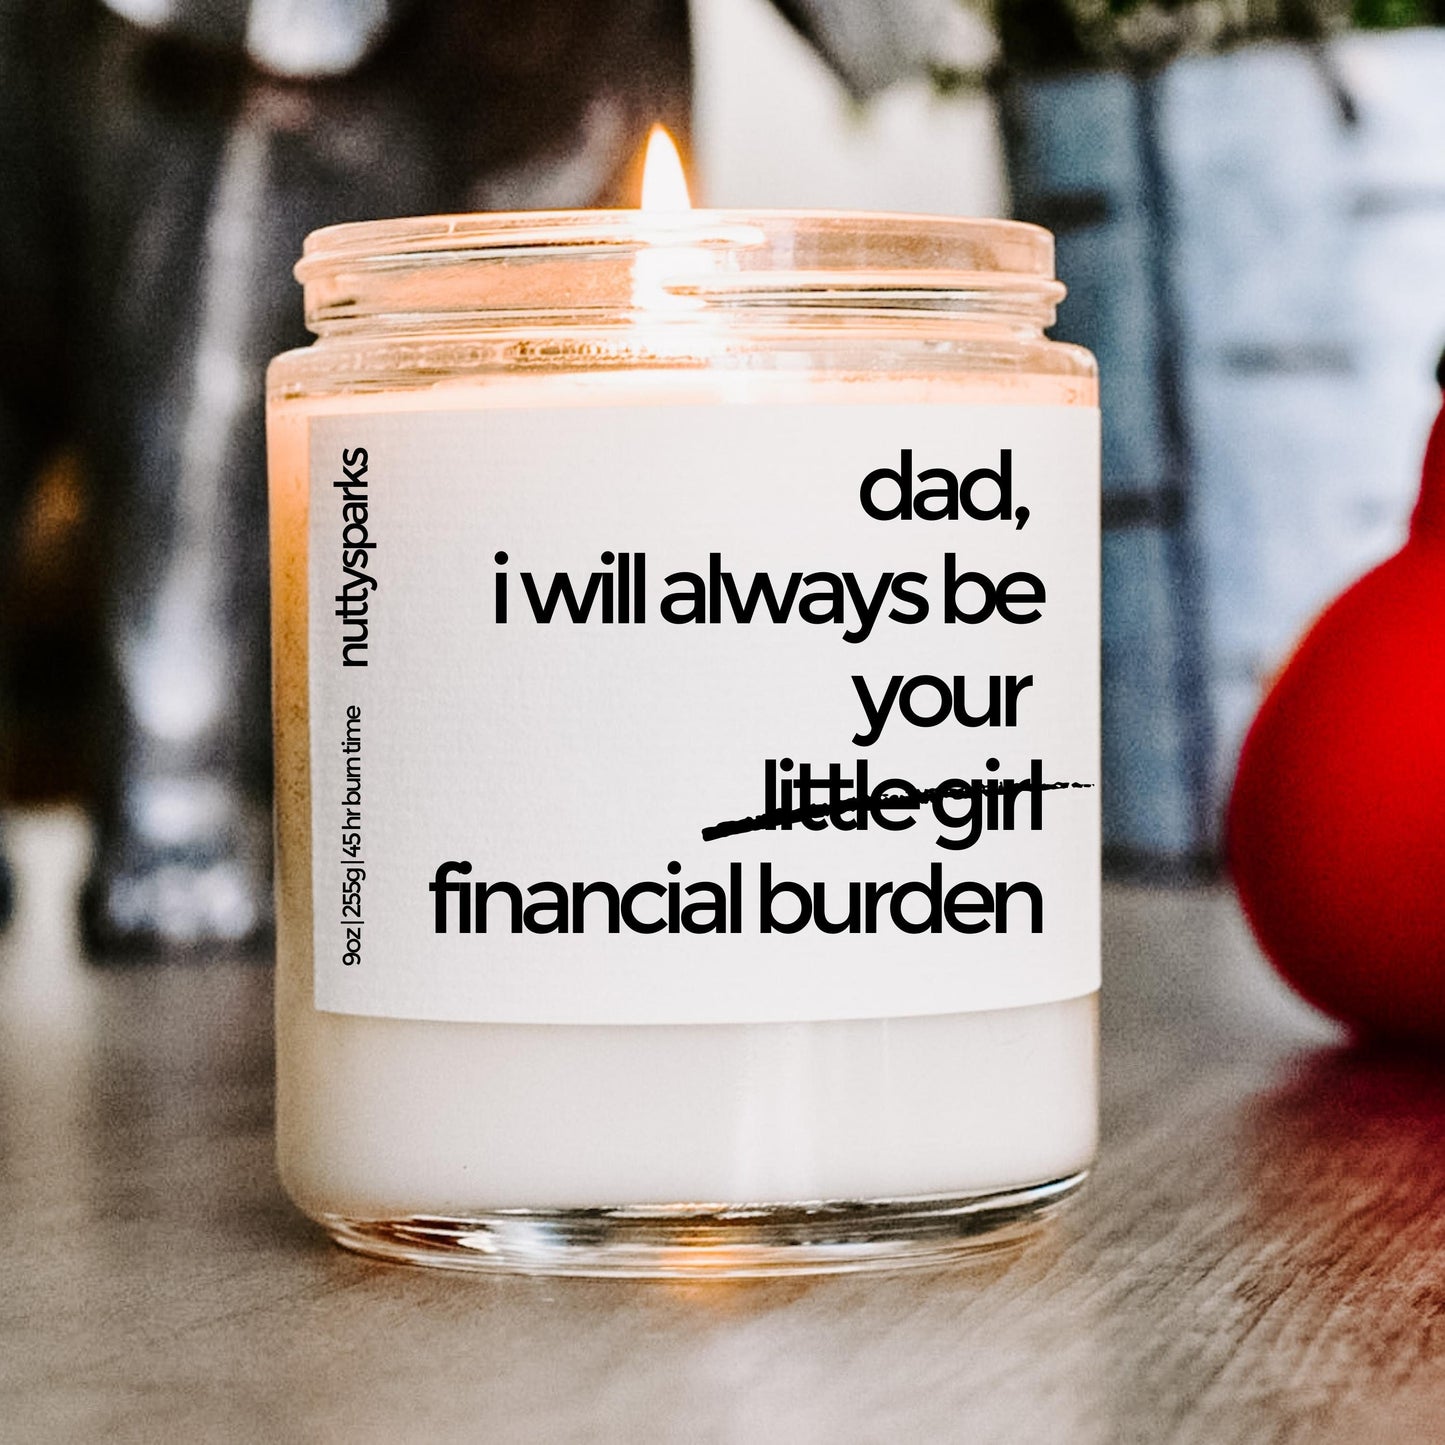 dad, I will always be your financial burden